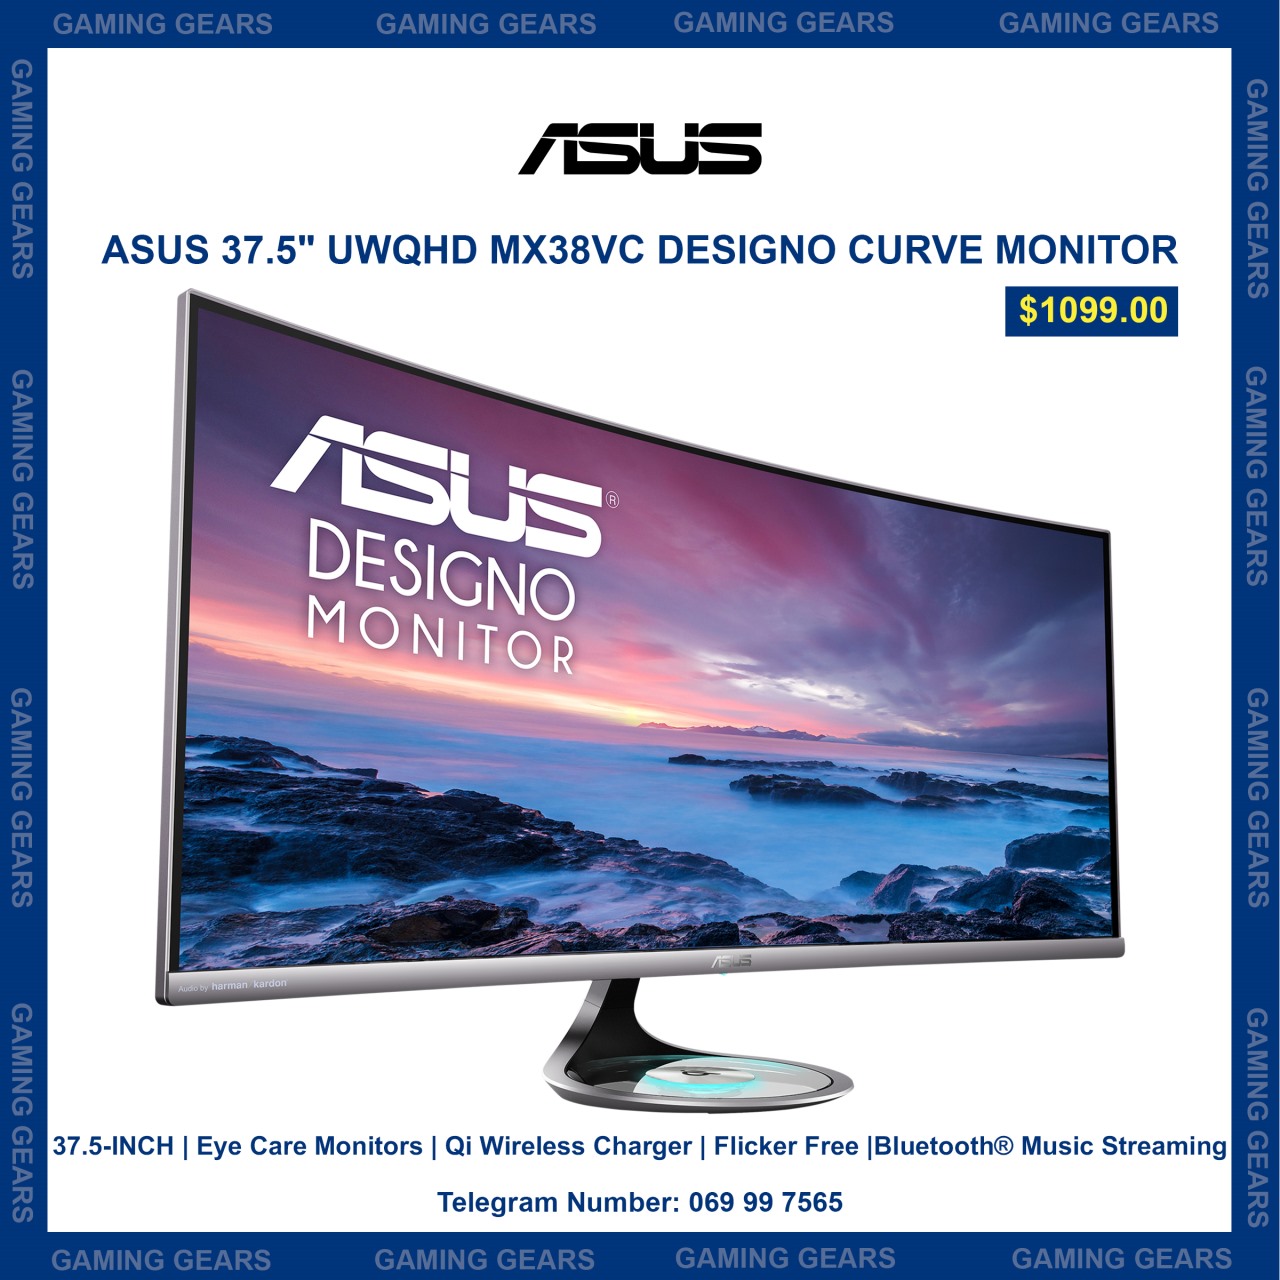 Asus 37.5" UWQHD MX38VC Designo Curve Monitor